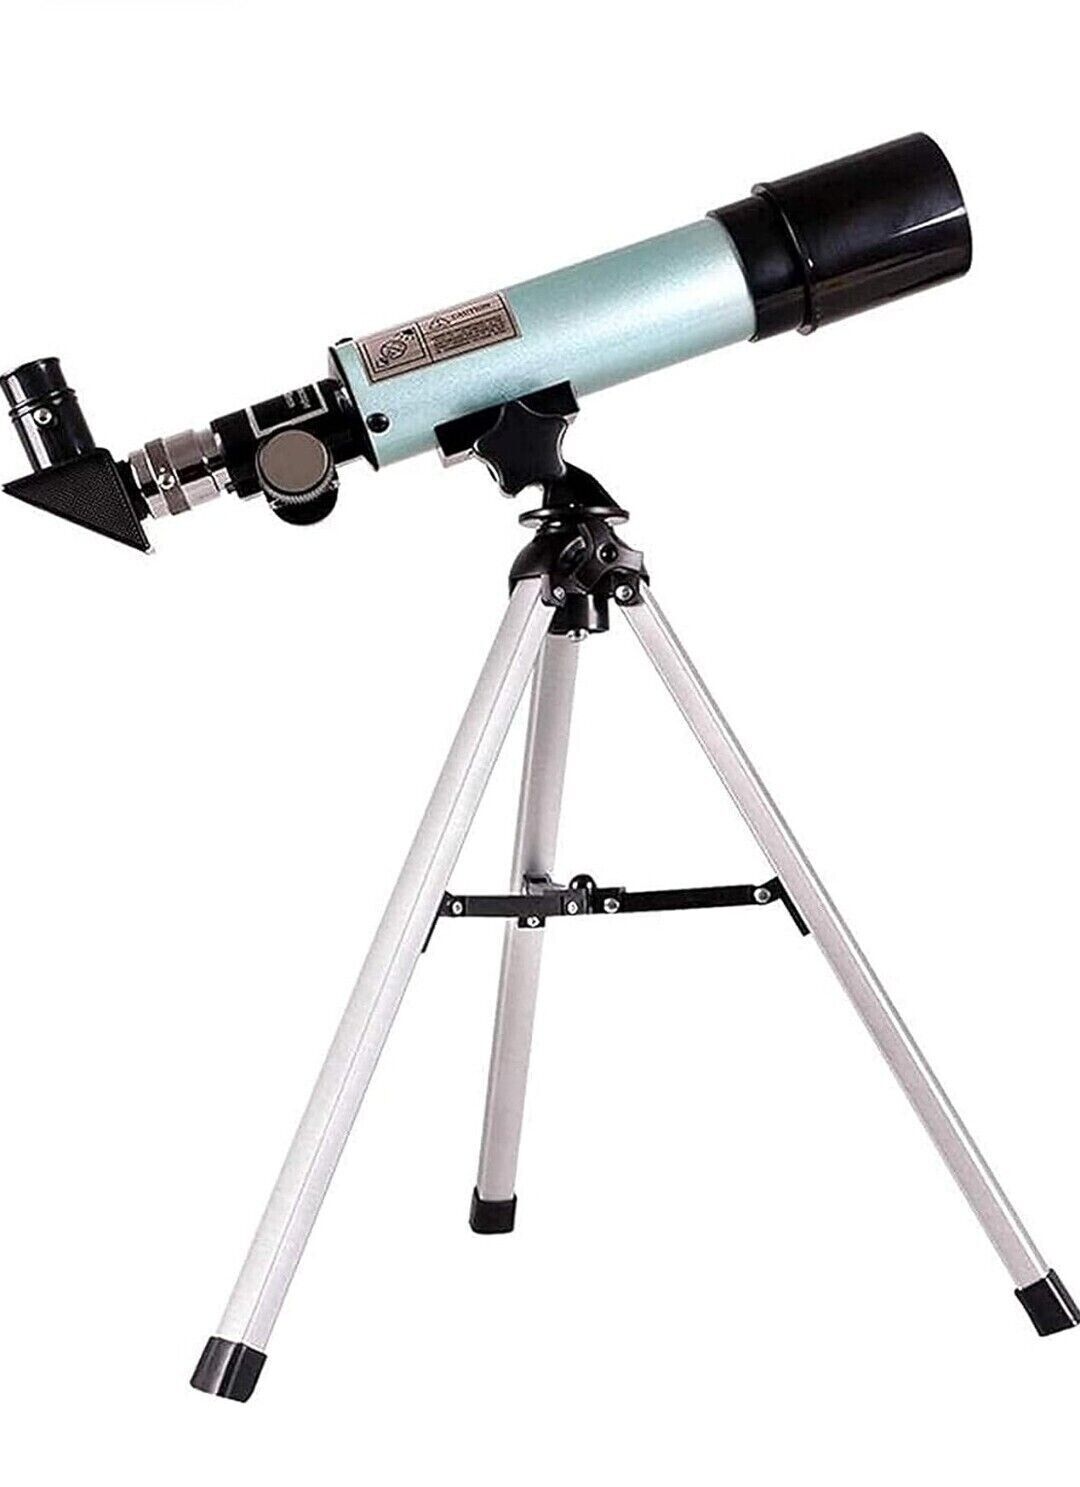 F36050 Astronomical 360x50mm Lens 90x Zoom Optical Glass Telescope & Tripod .